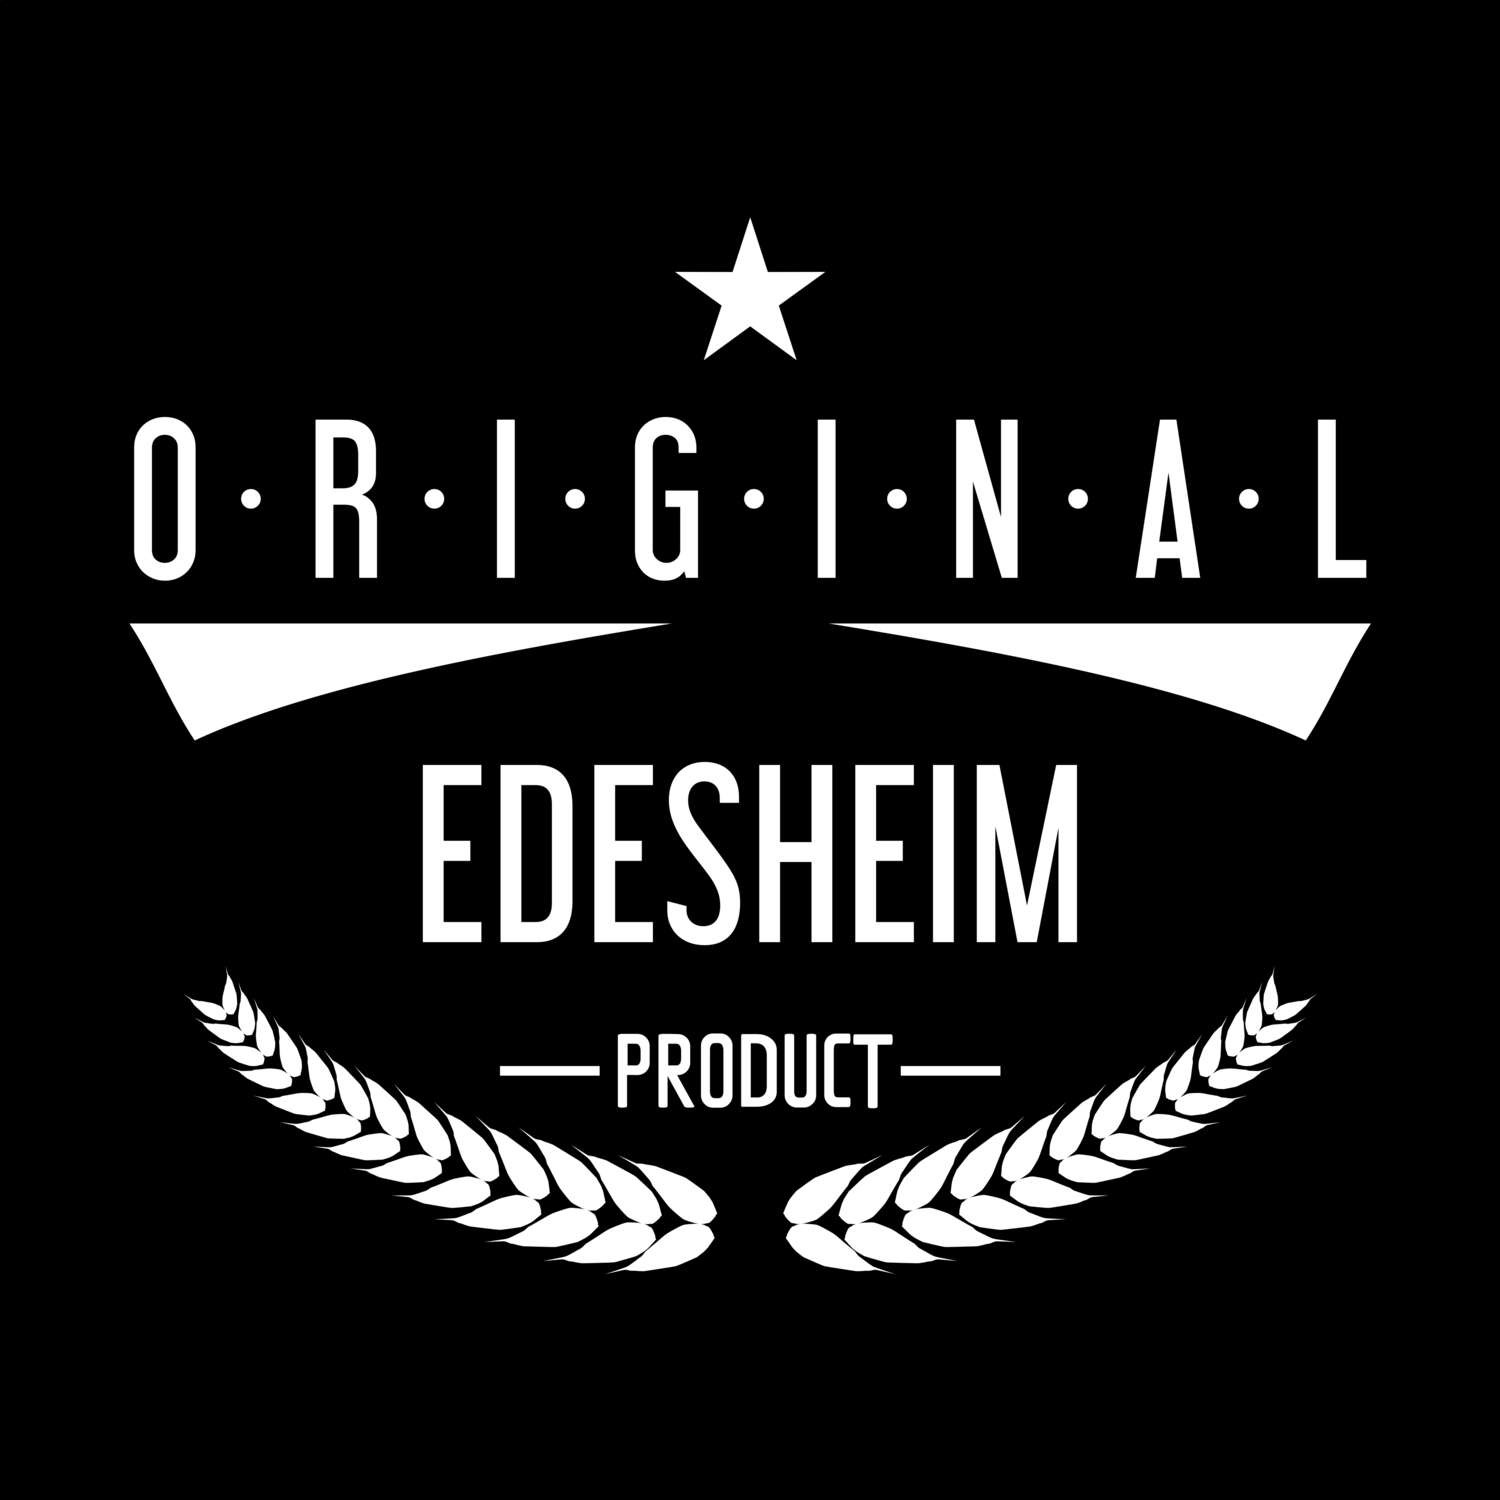 Edesheim T-Shirt »Original Product«